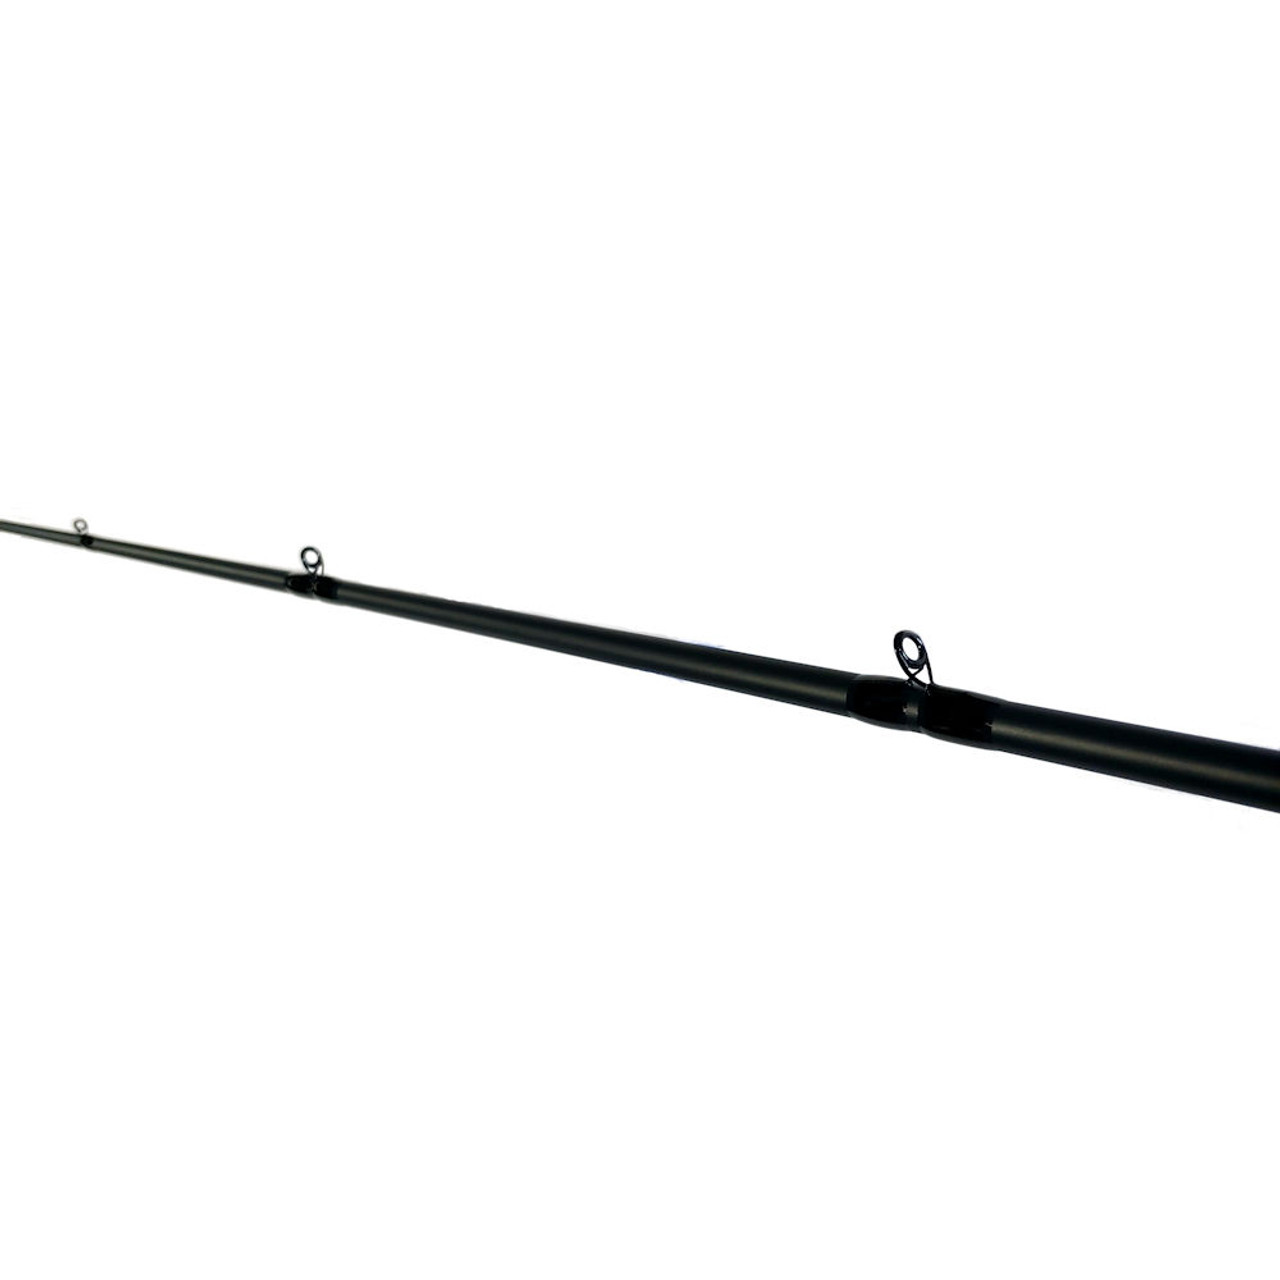 7' Medium Heavy Casting Rod For Bass Fishing